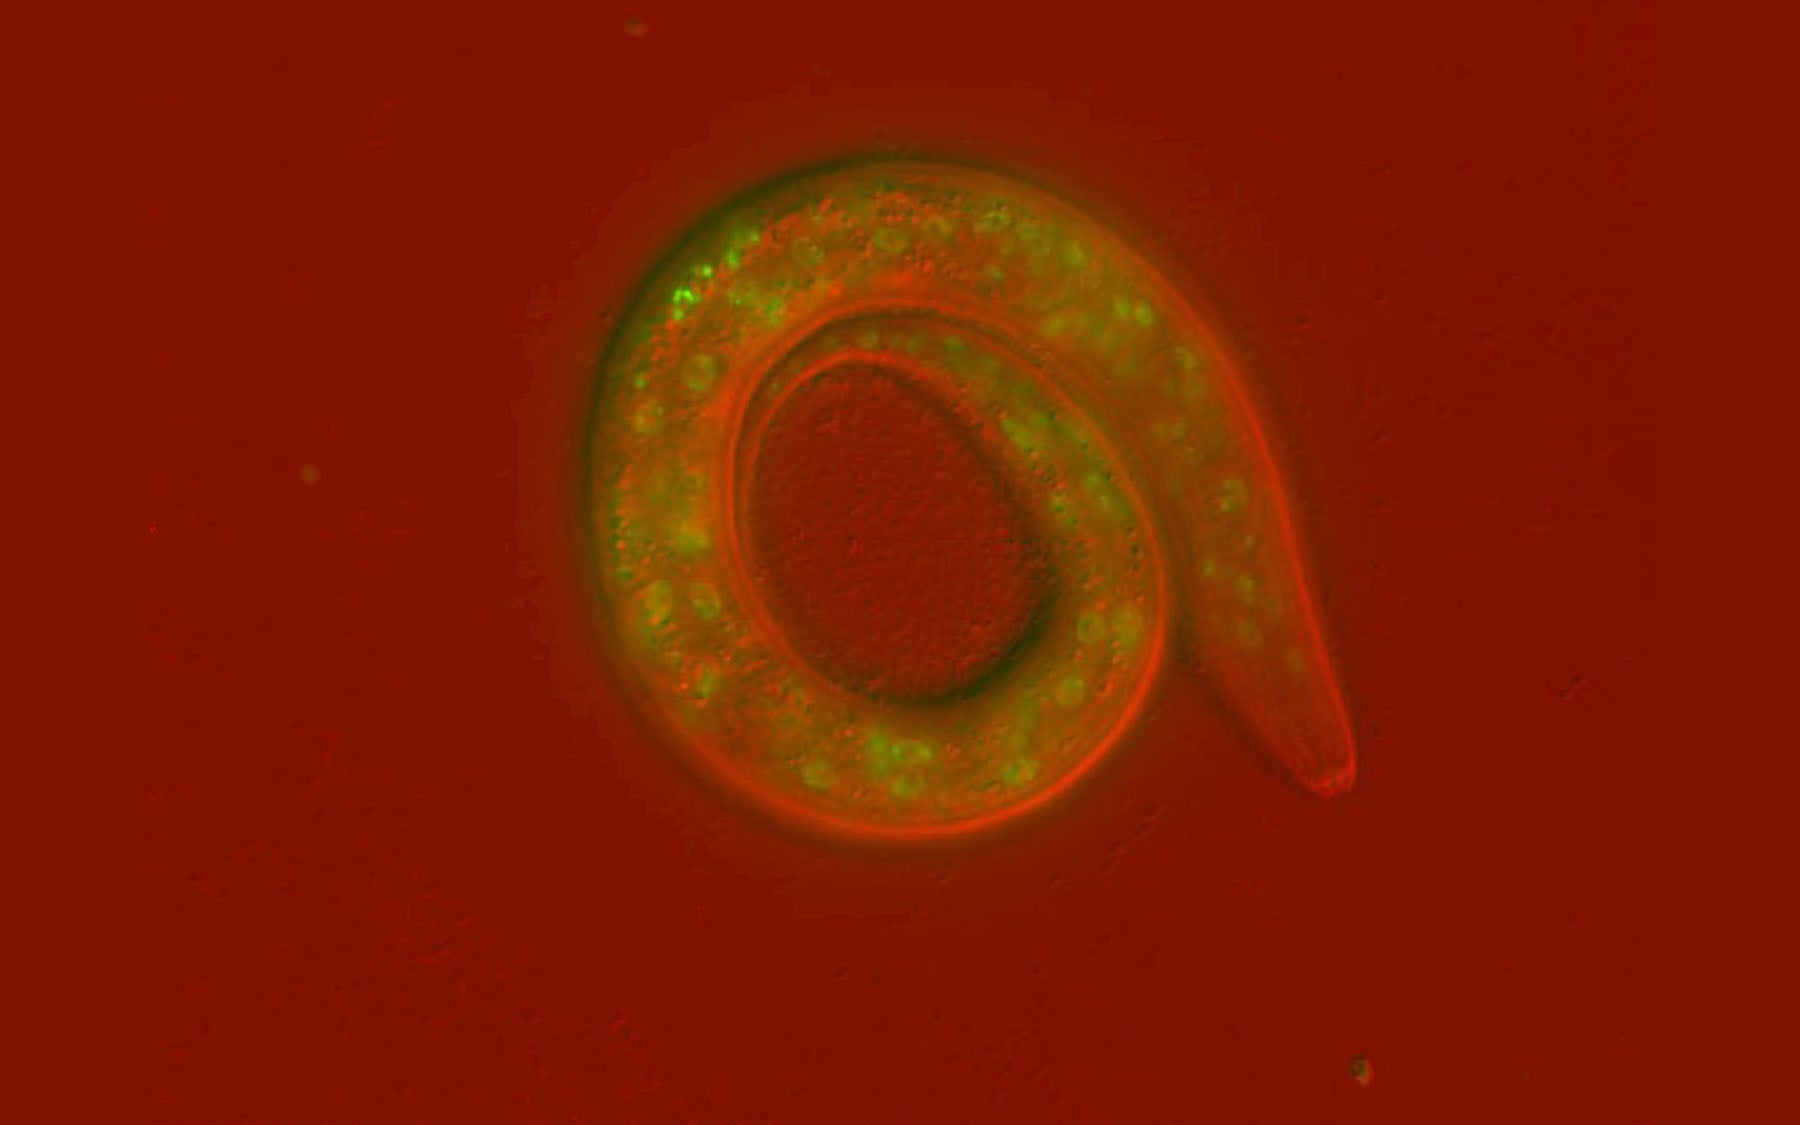 C. elegans worm